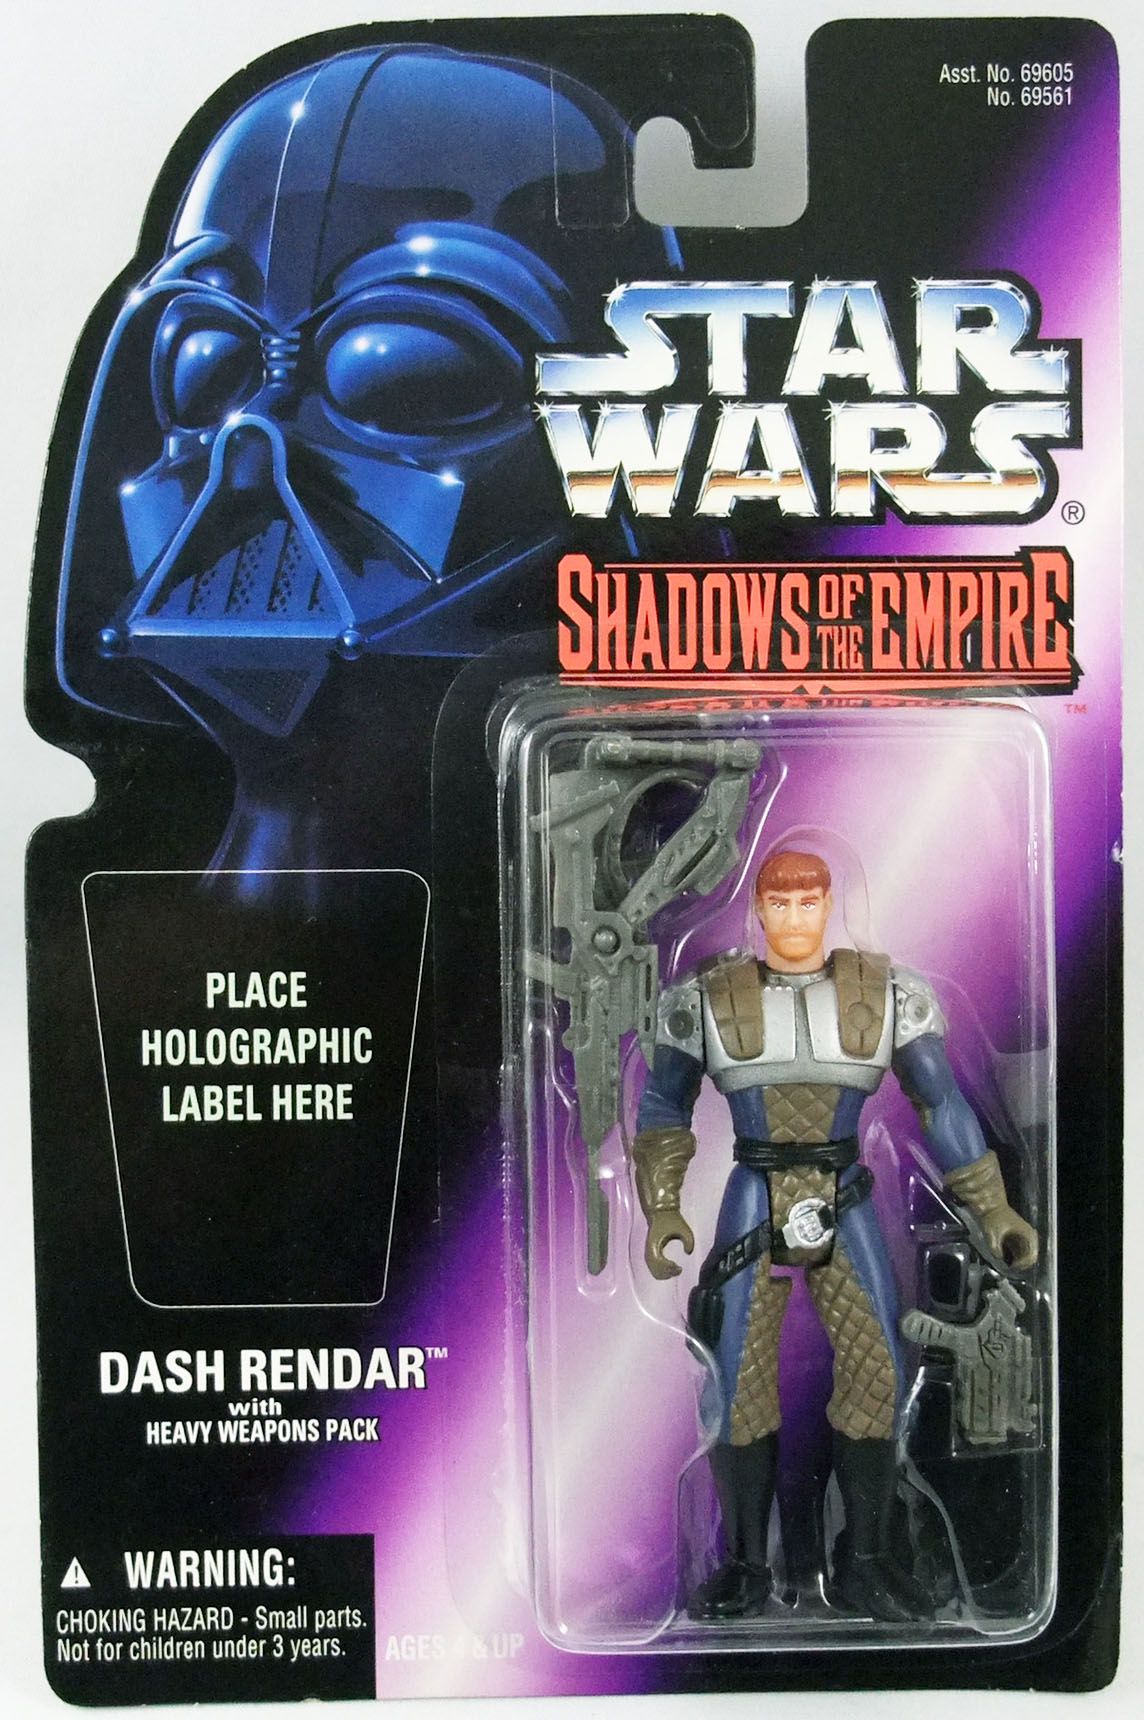 Hasbro Star Wars Shadows of the Empire Dash Rendar Action Figure for sale online 